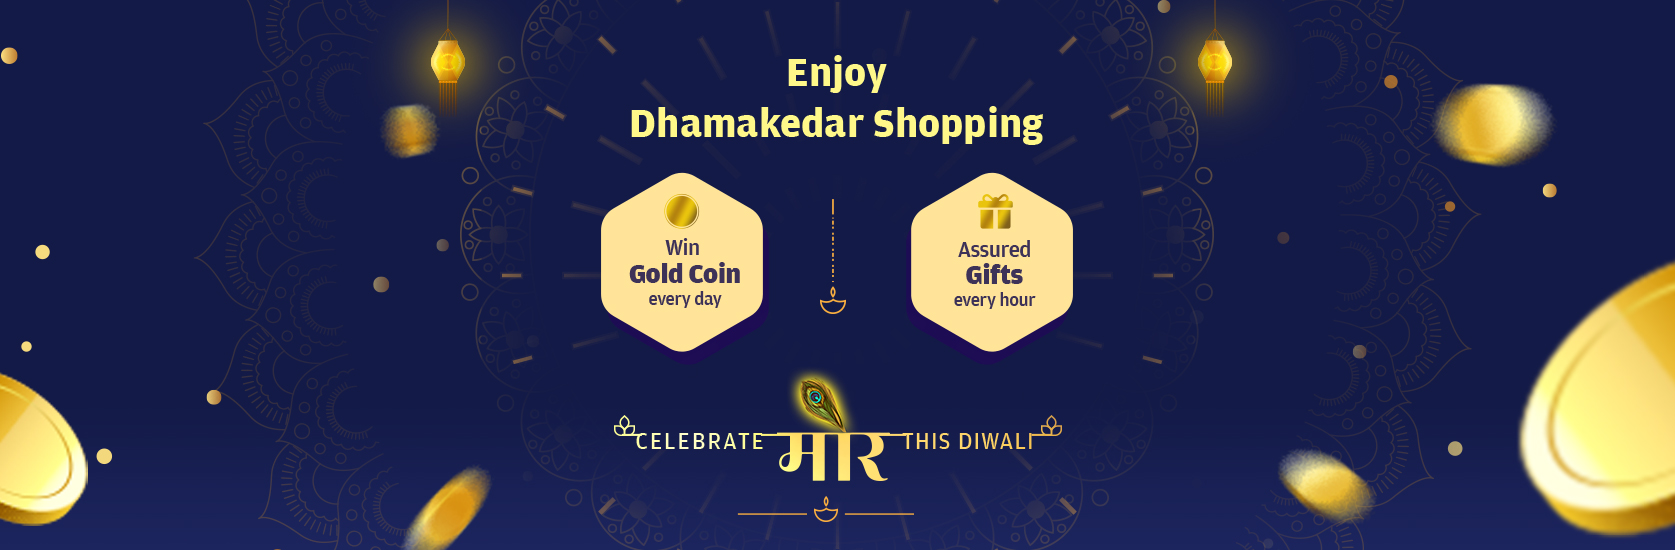 Enjoy Dhamakedar Shopping